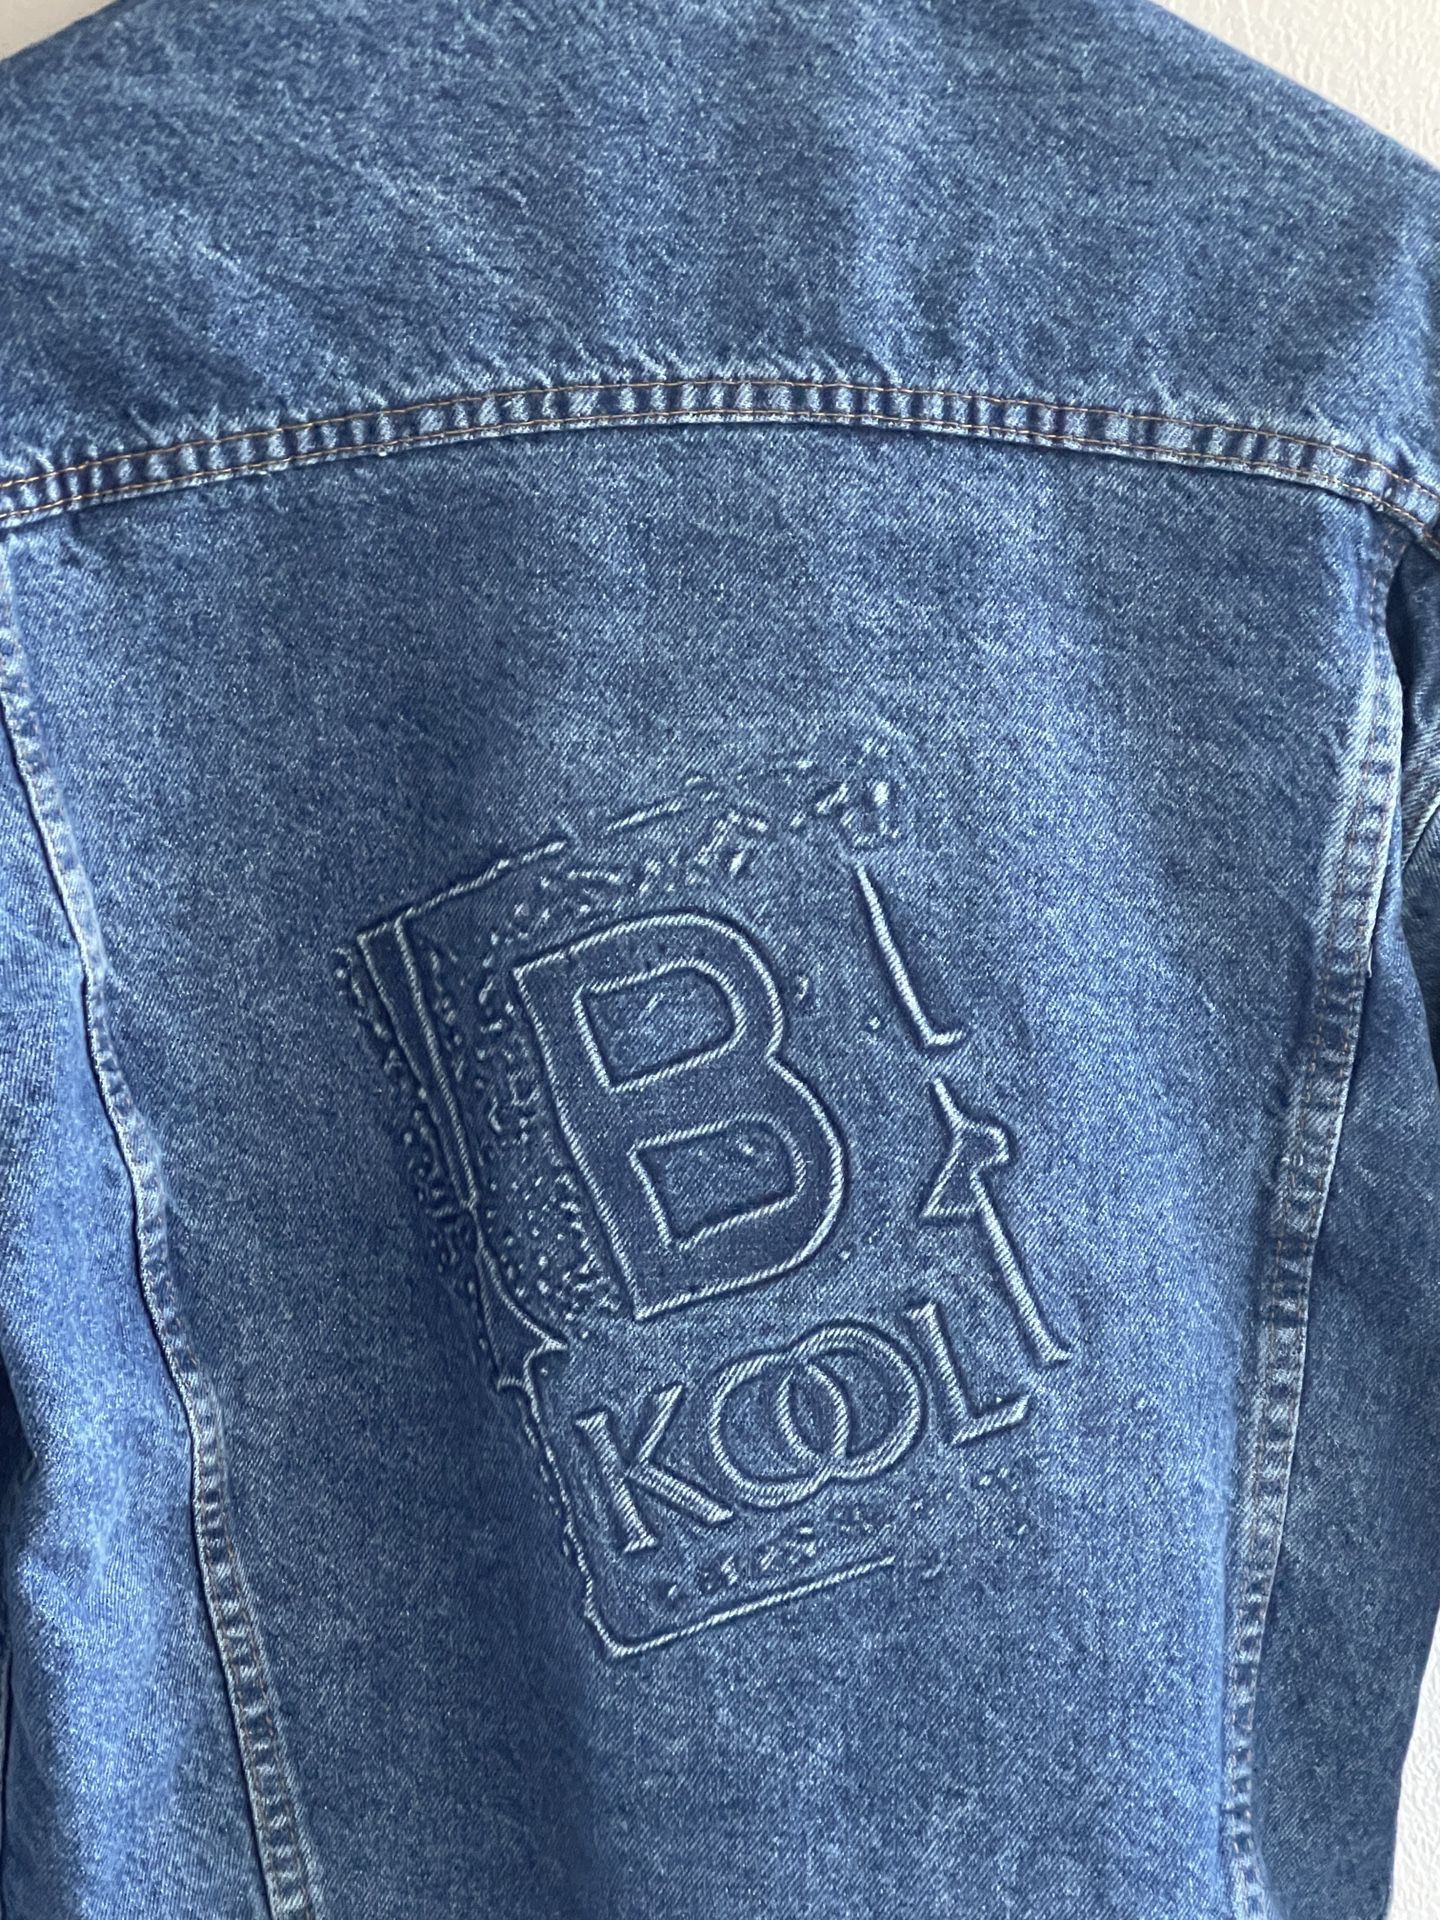 90's "B Kool" Denim Button Front Jacket Made in the USA   Bin n